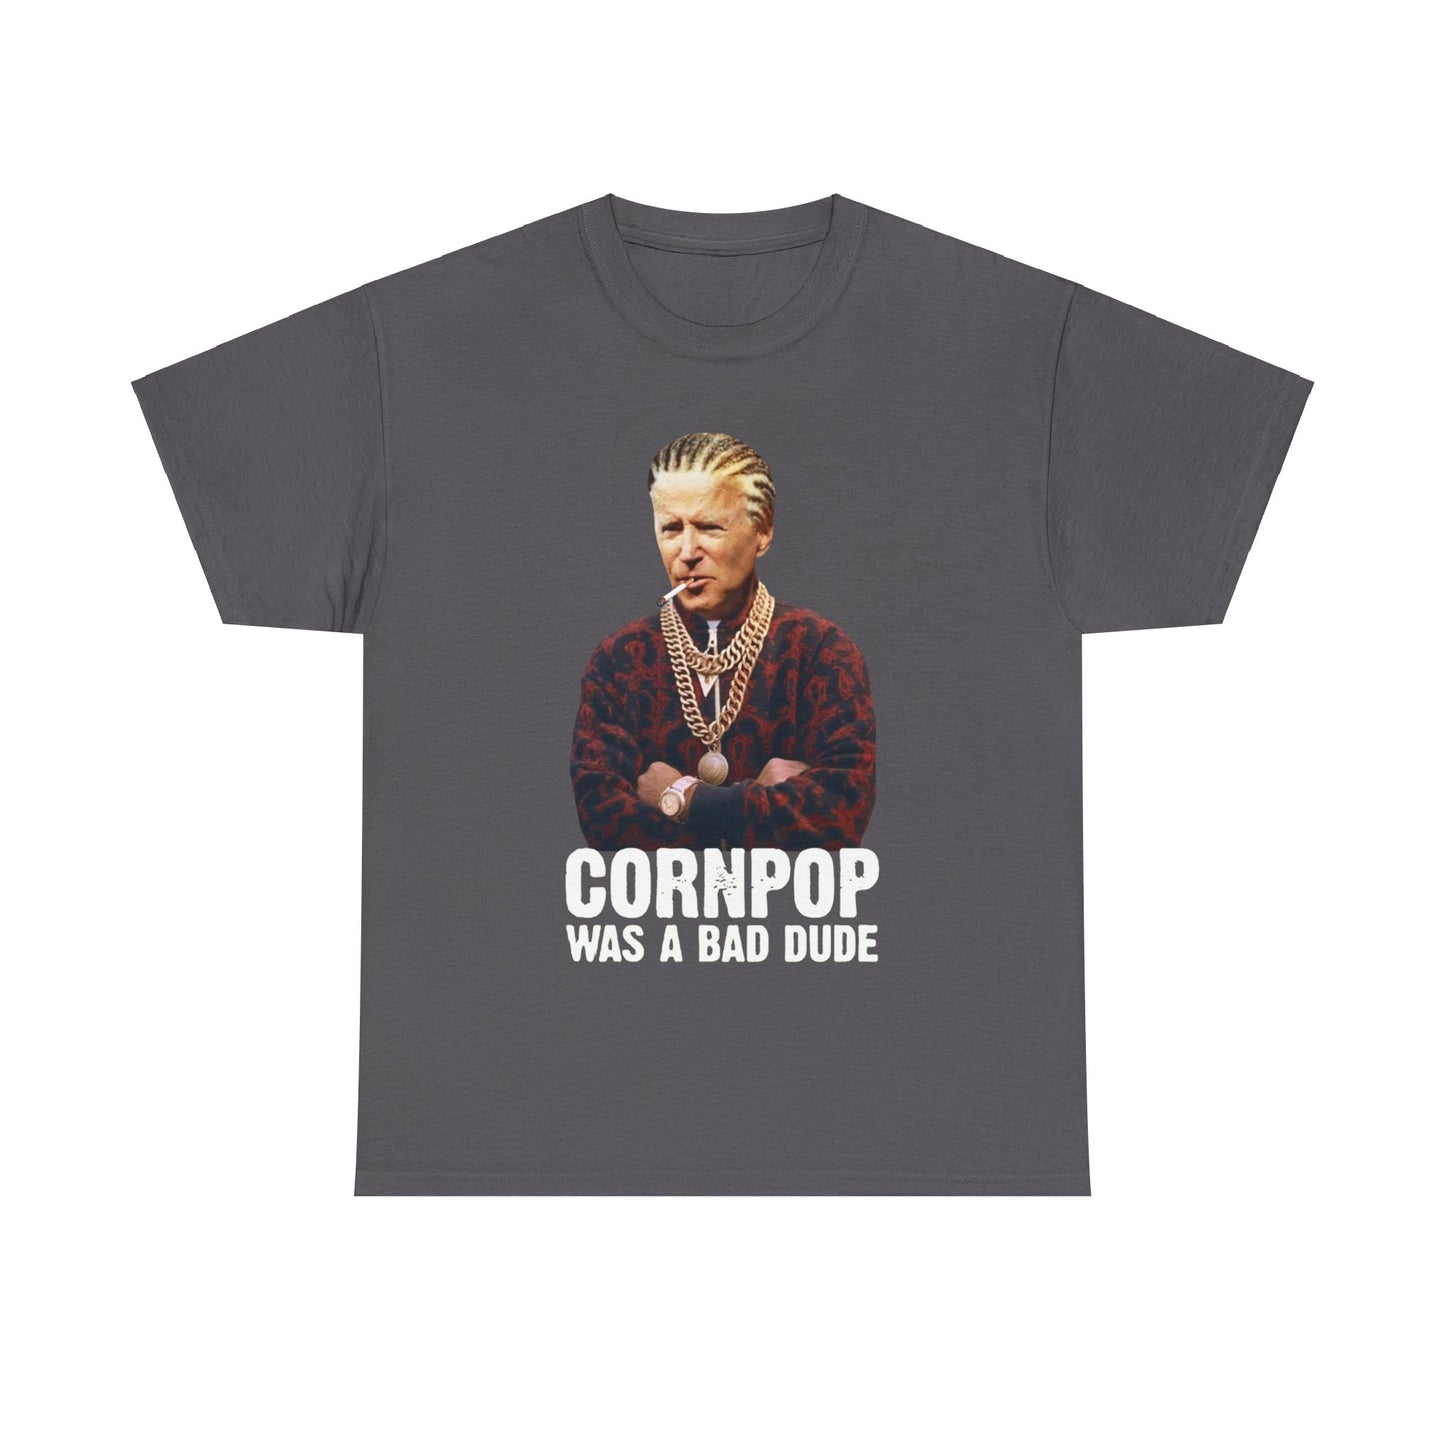 Cornpop was a bad dude shirt